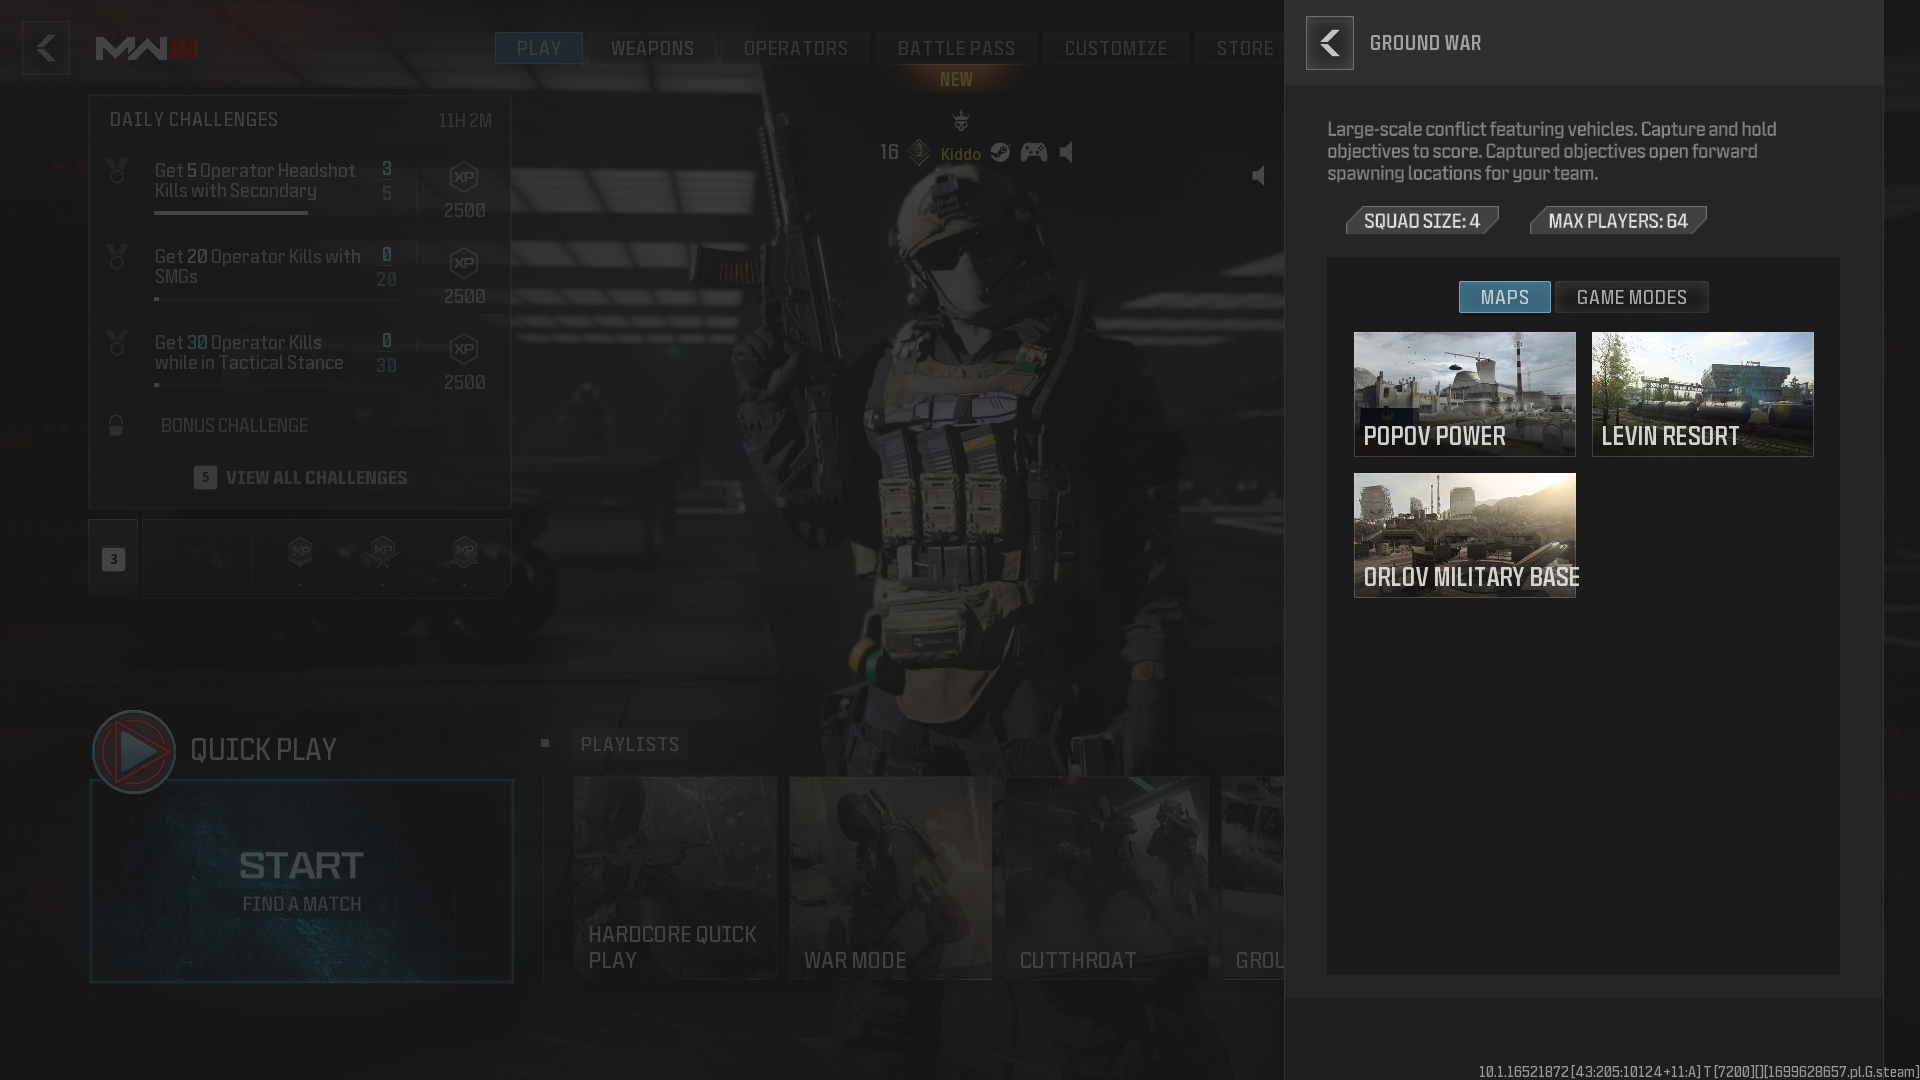 Screenshot of the Call of Duty Modern Warfare 3 multiplayer menu showing the Ground War option.